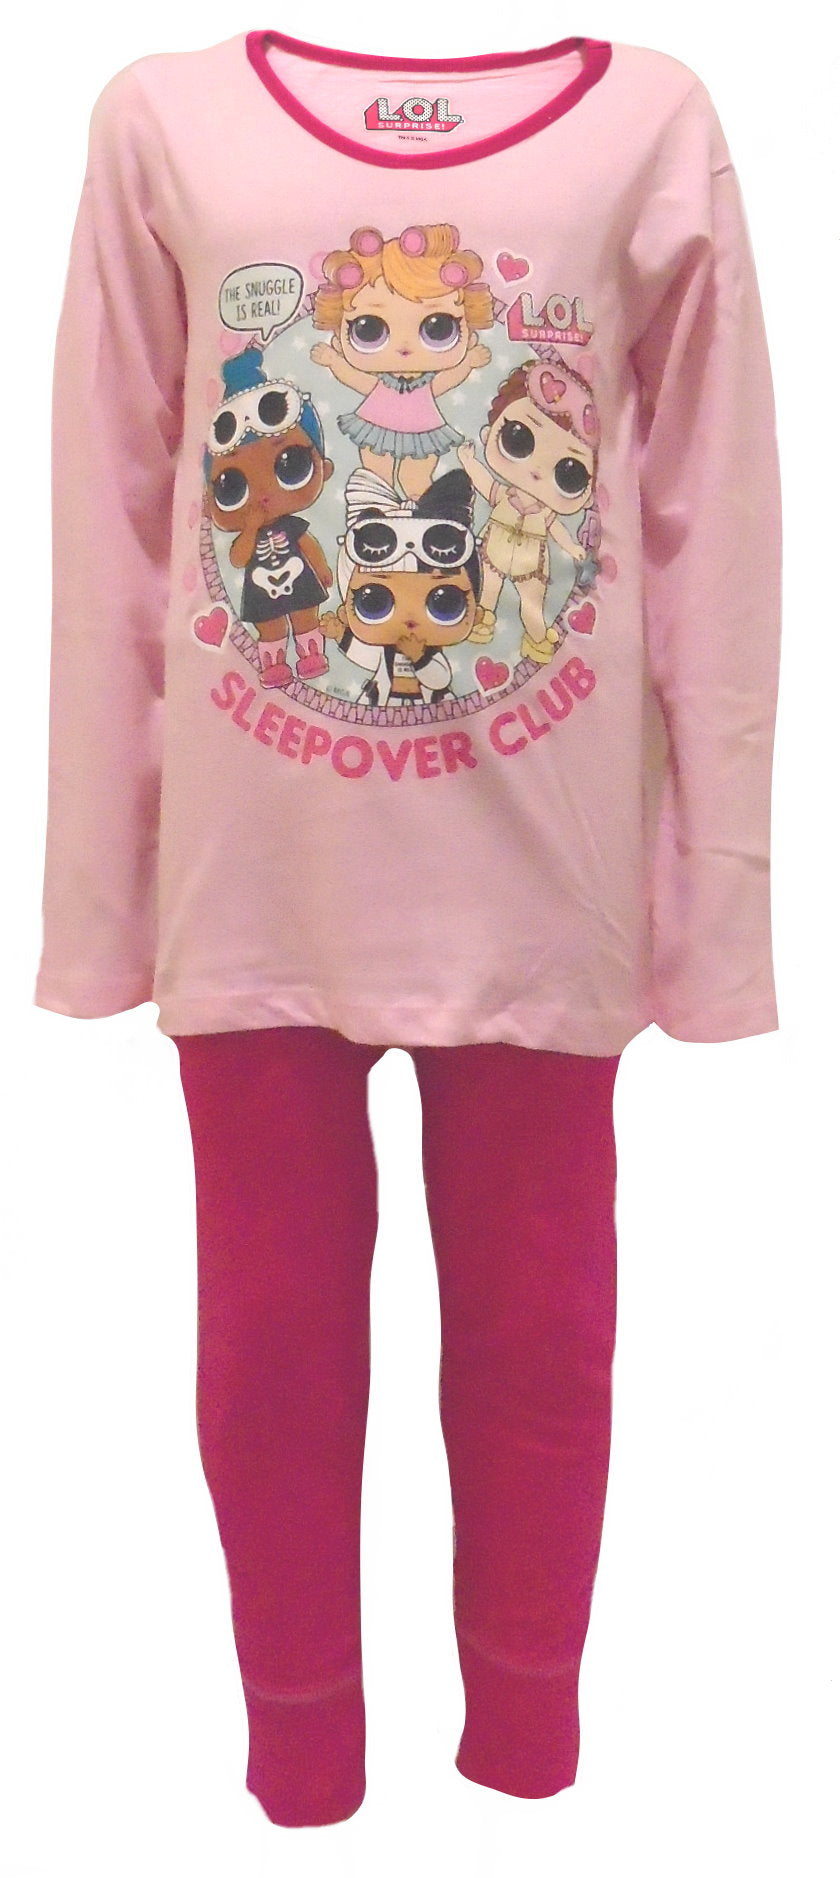 L.O.L Surprise! "Sleepover Club" Girls Pyjamas - 4-5 Years